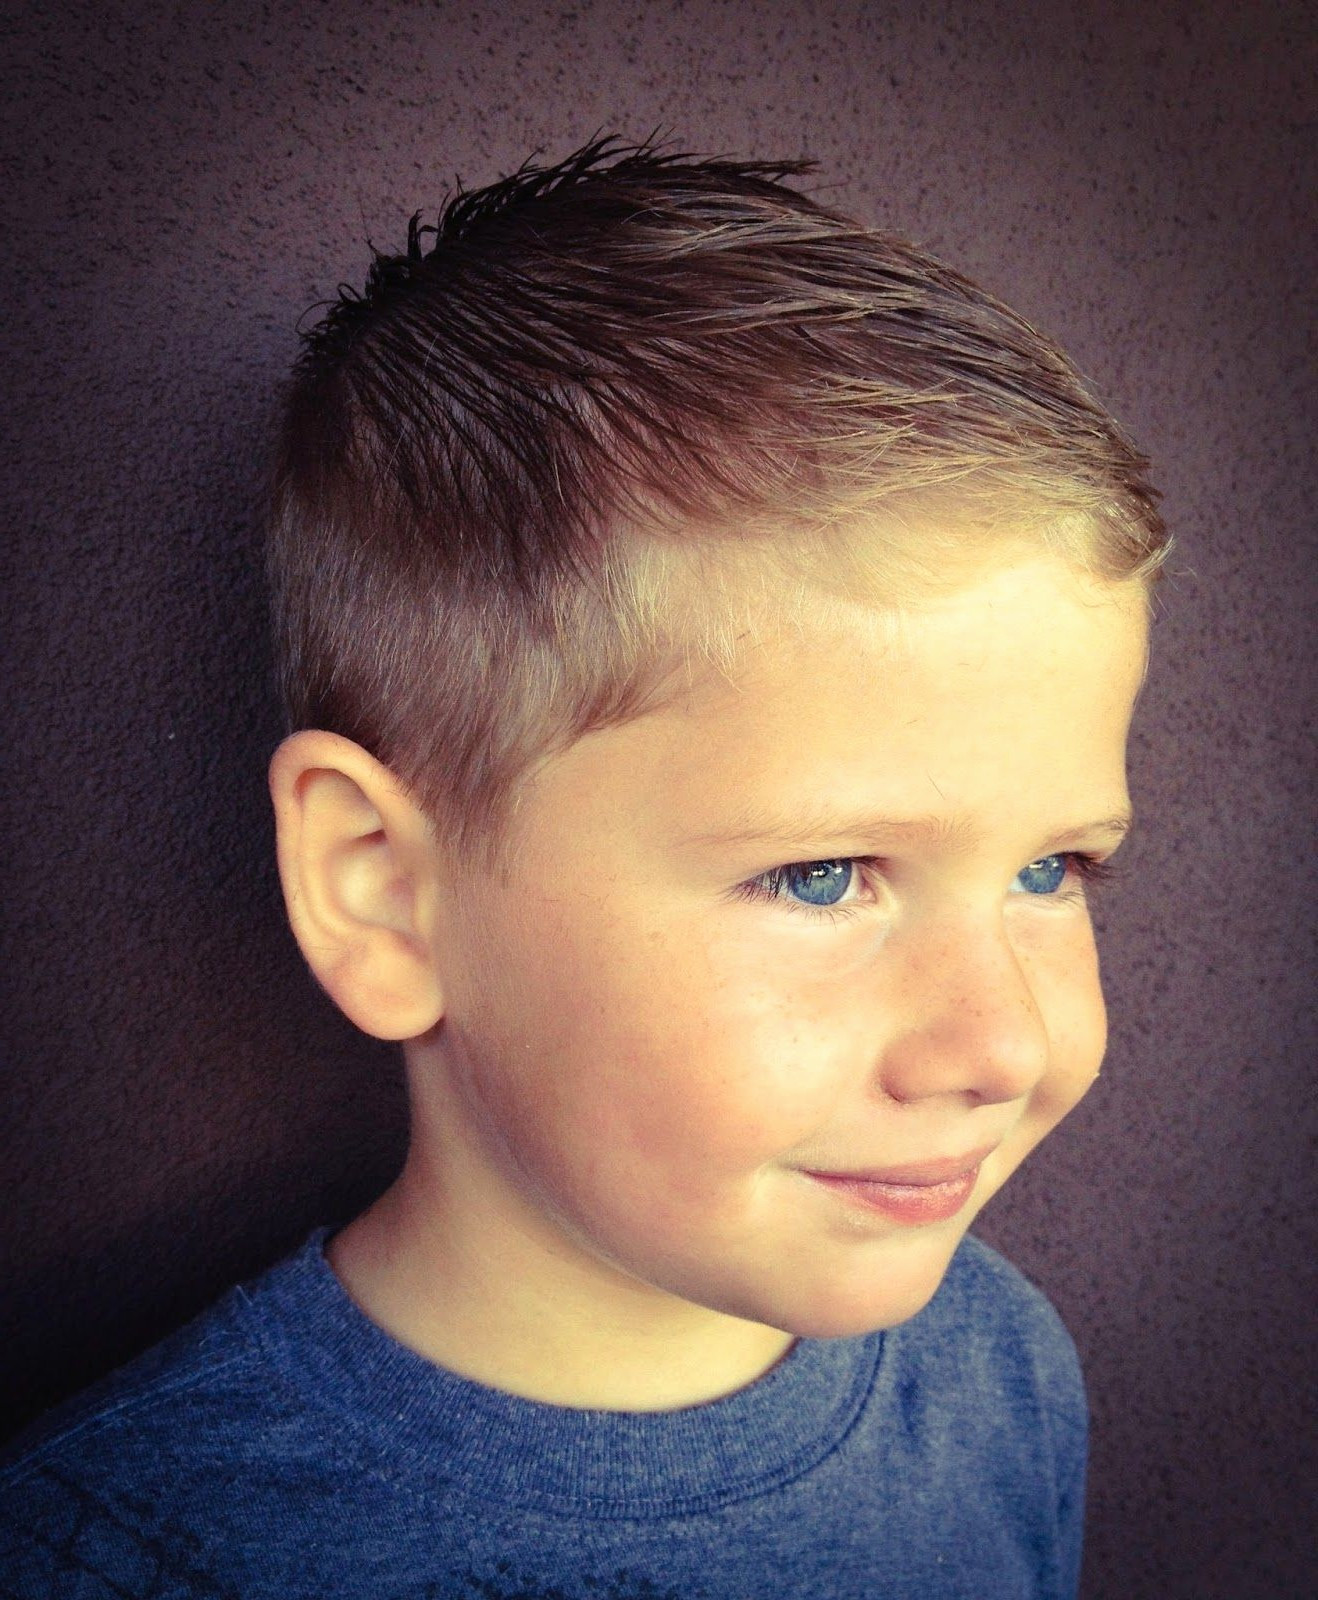 10 Year Old Boy Haircuts
 Home Haircut Today